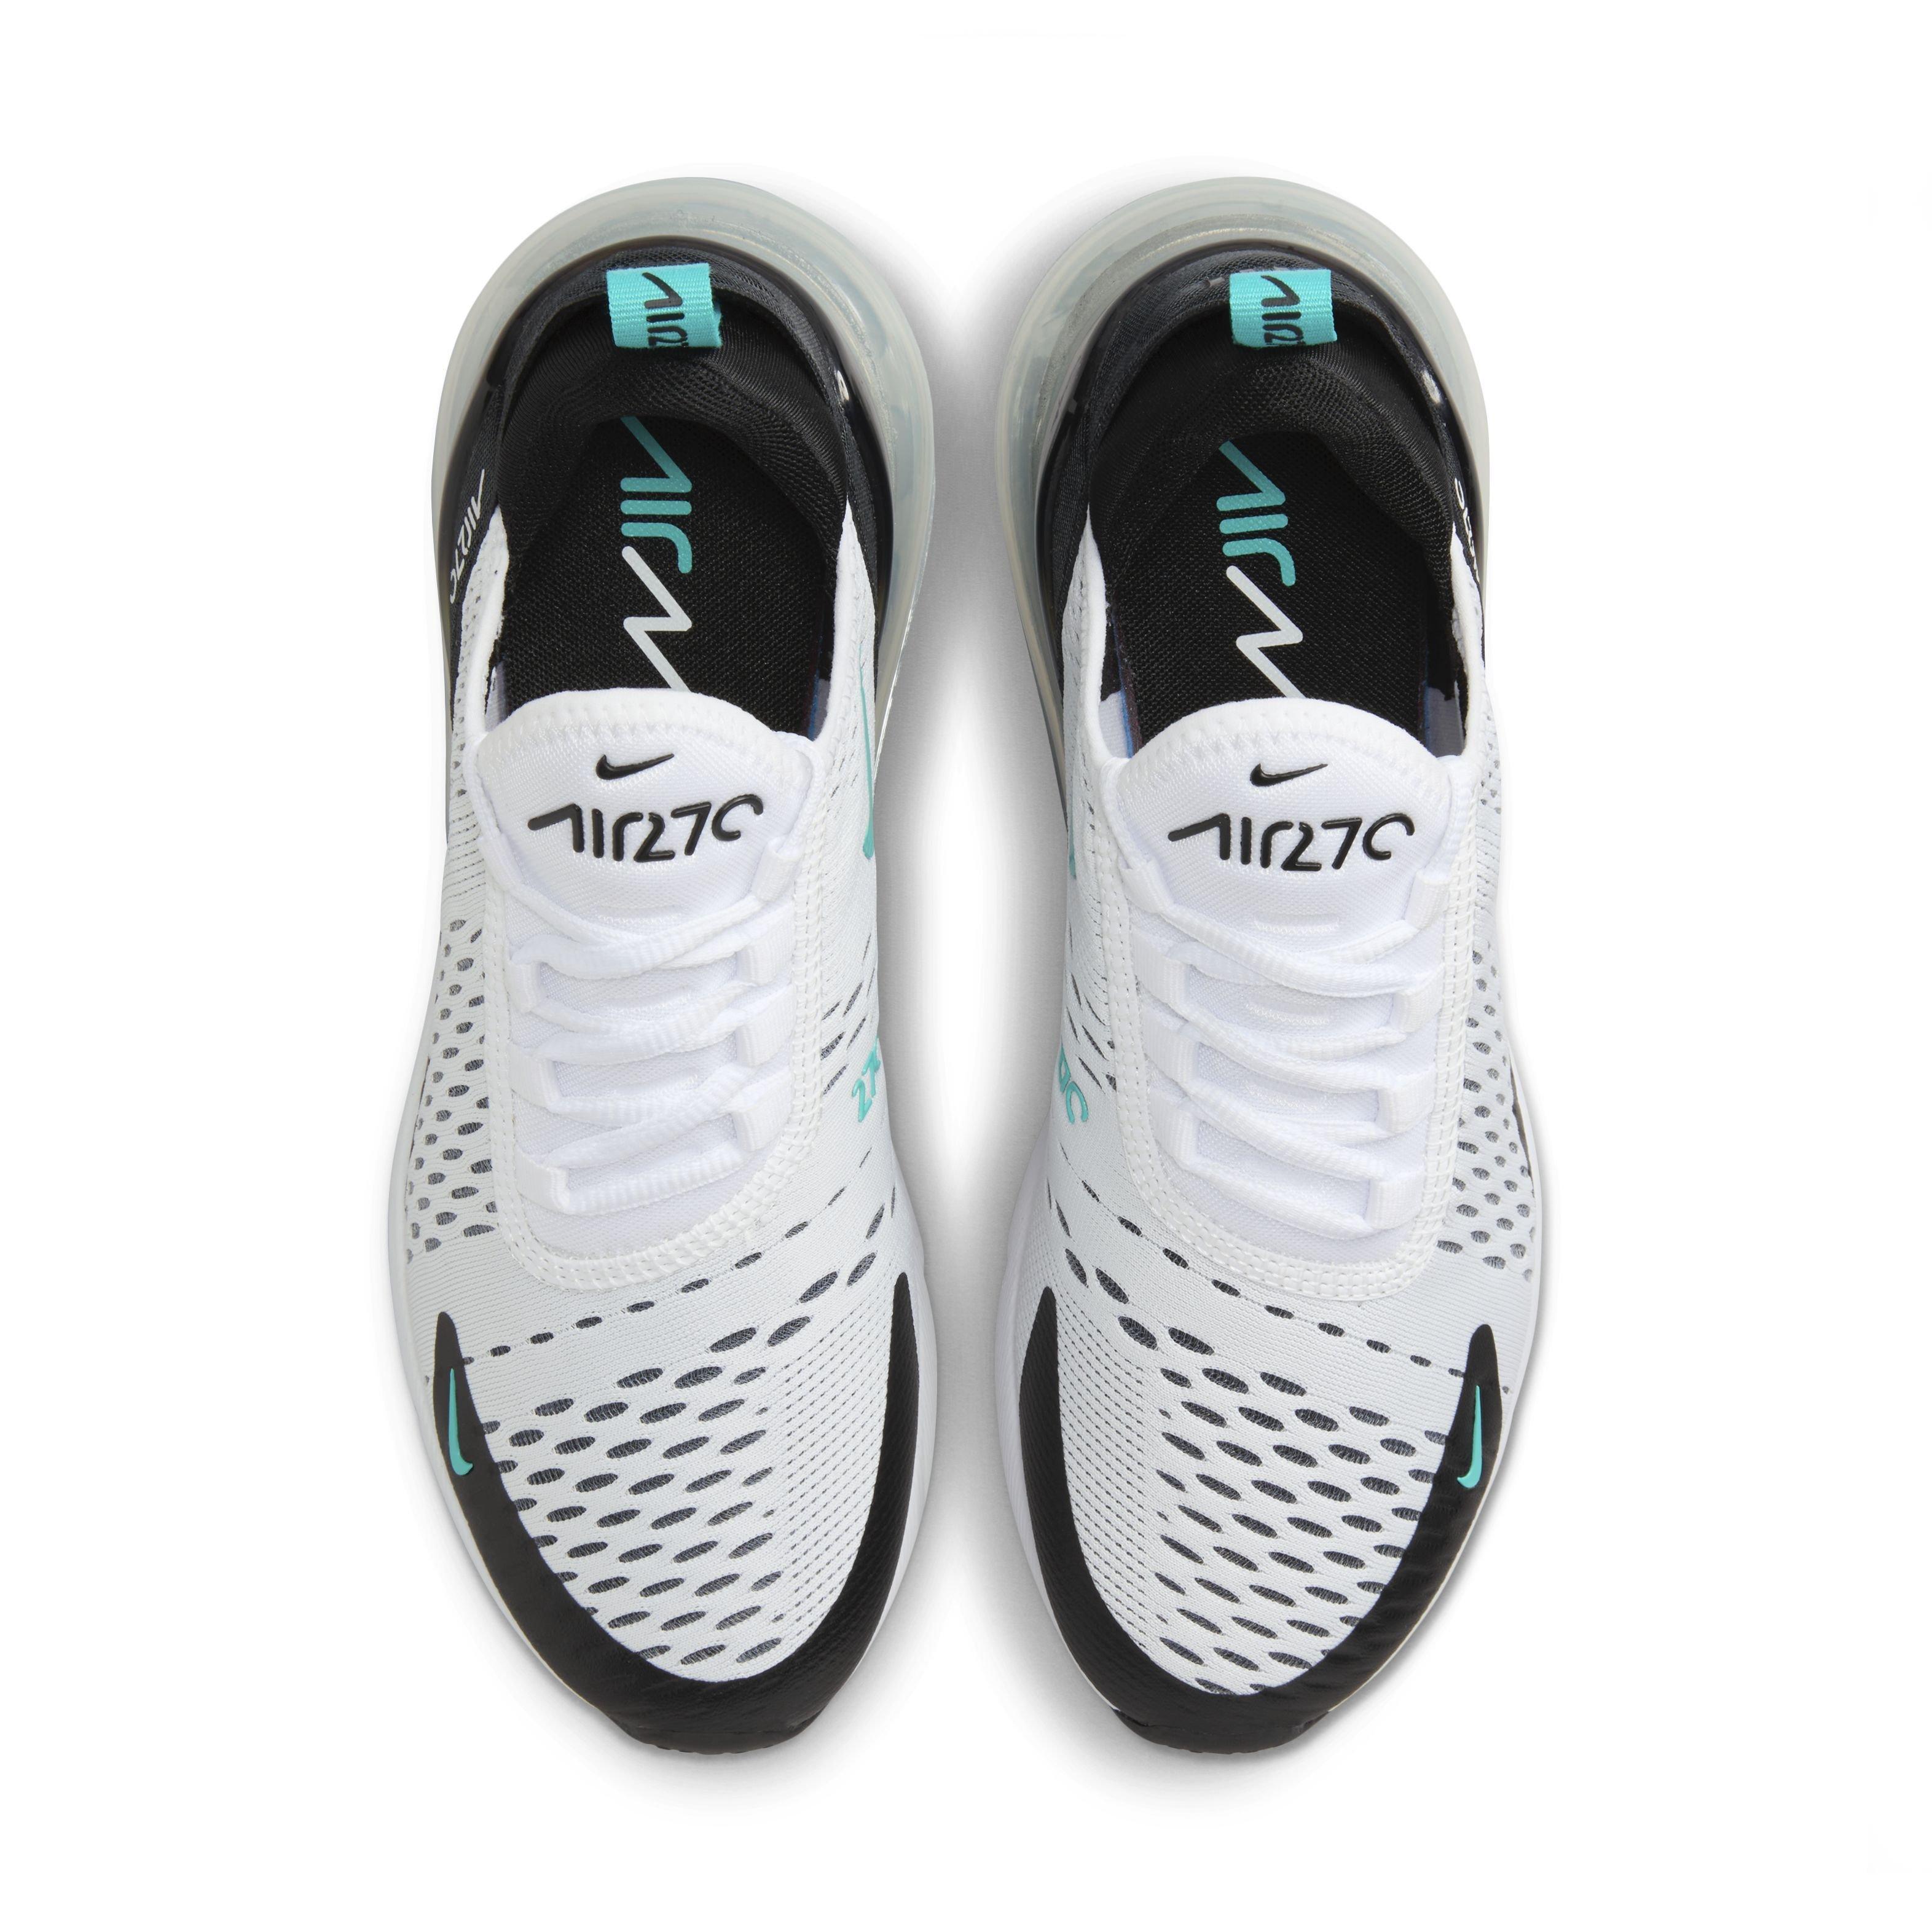 Nike Air Max 270 Women's Shoes.